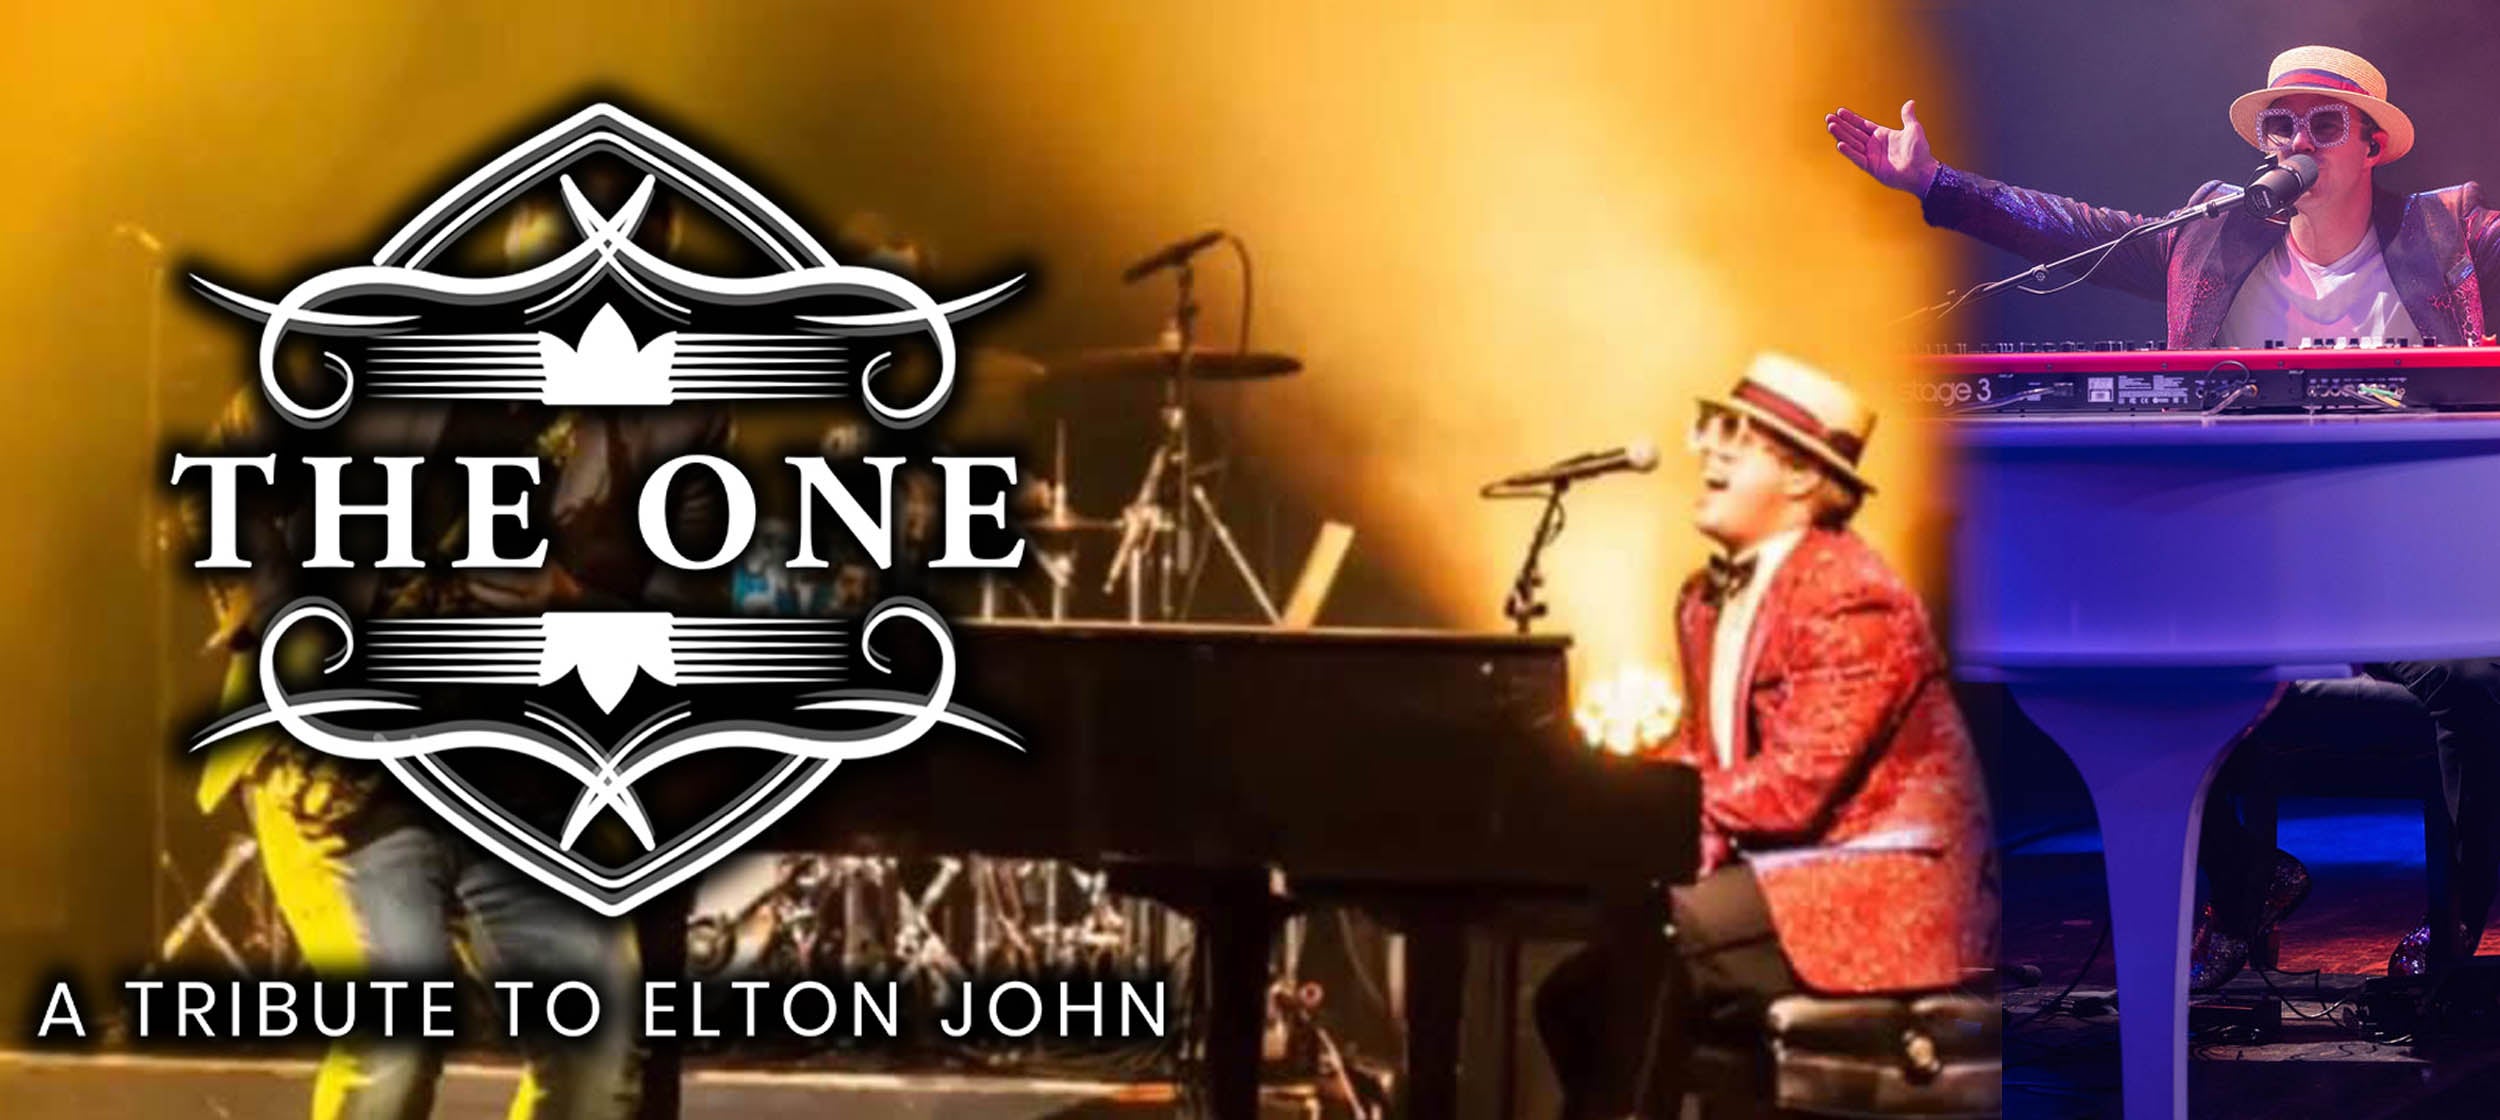 THE ONE - A Tribute to Elton John